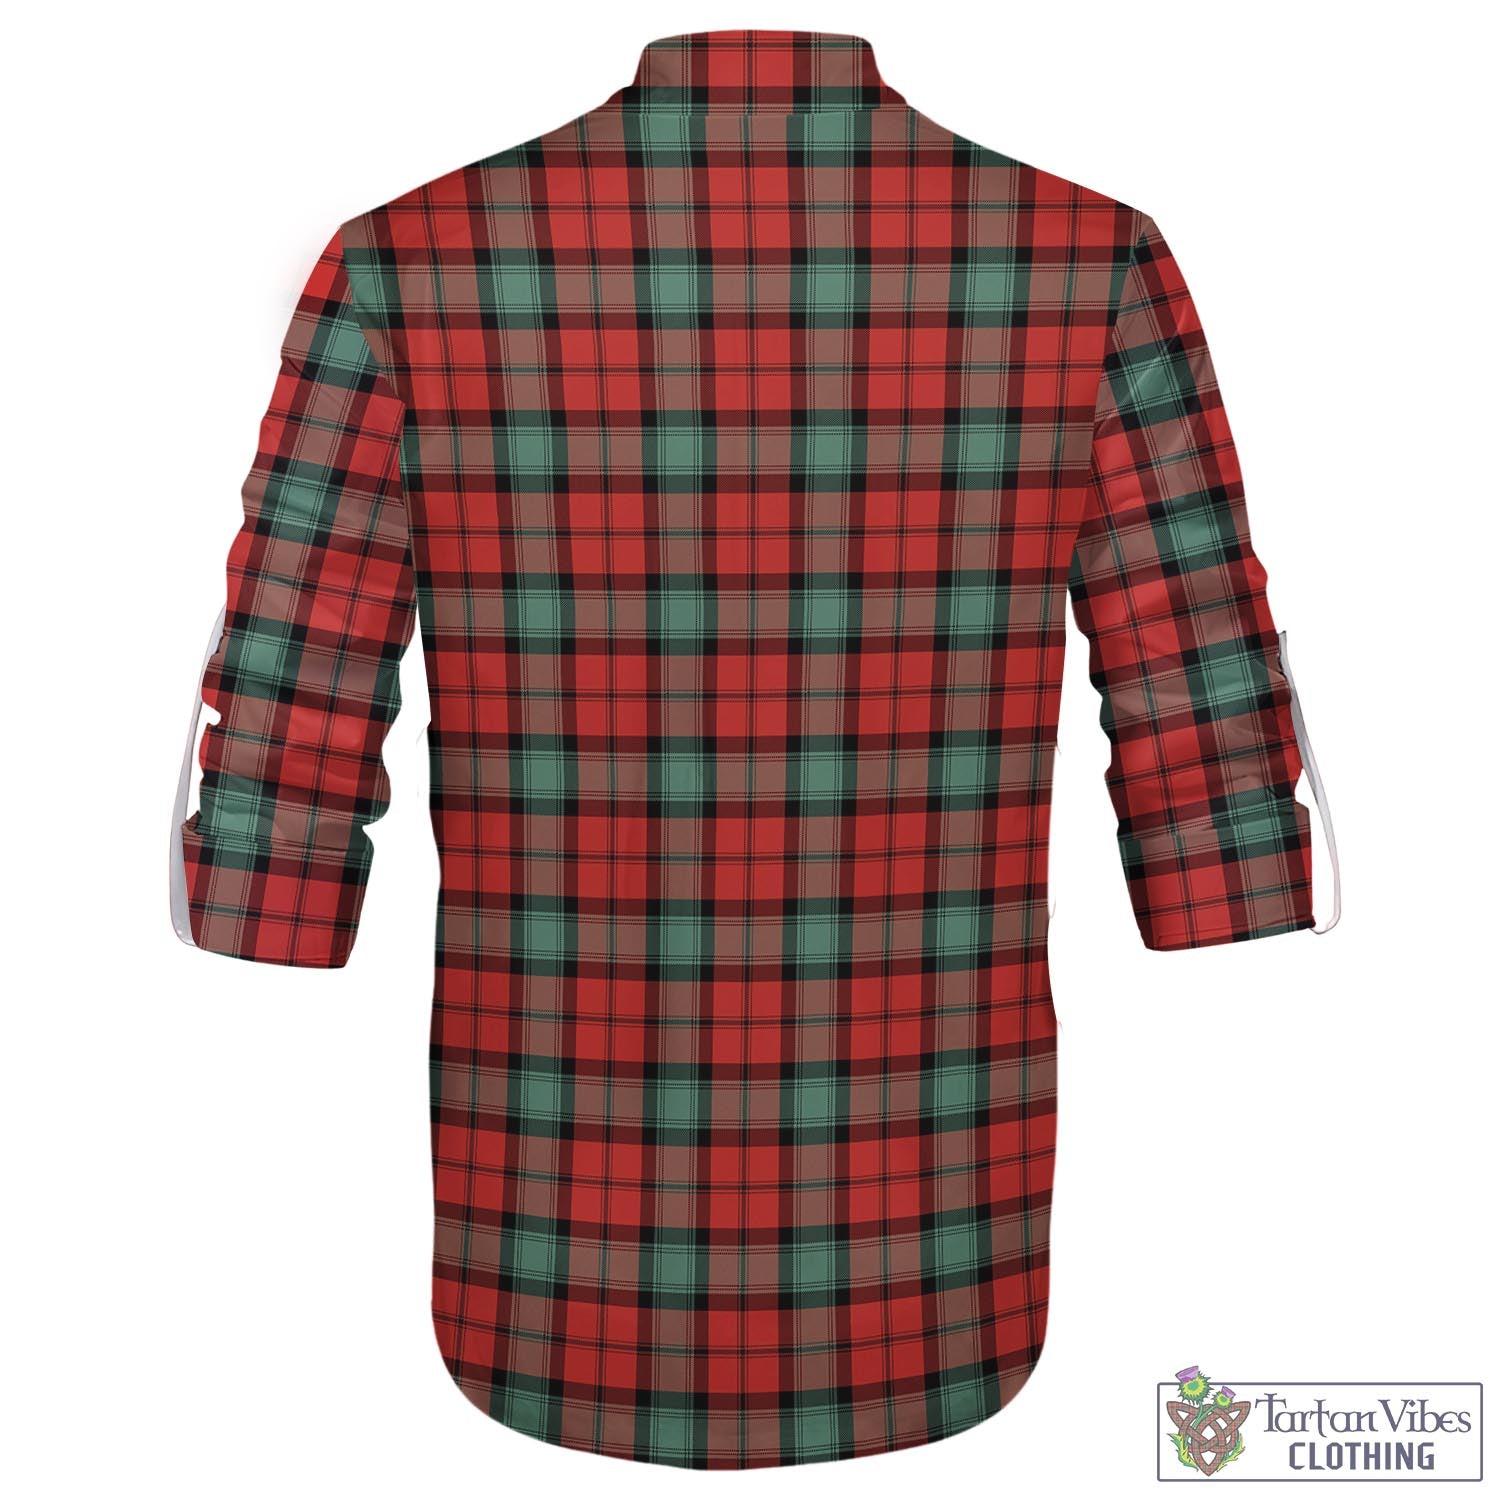 Tartan Vibes Clothing Kerr Ancient Tartan Men's Scottish Traditional Jacobite Ghillie Kilt Shirt with Family Crest